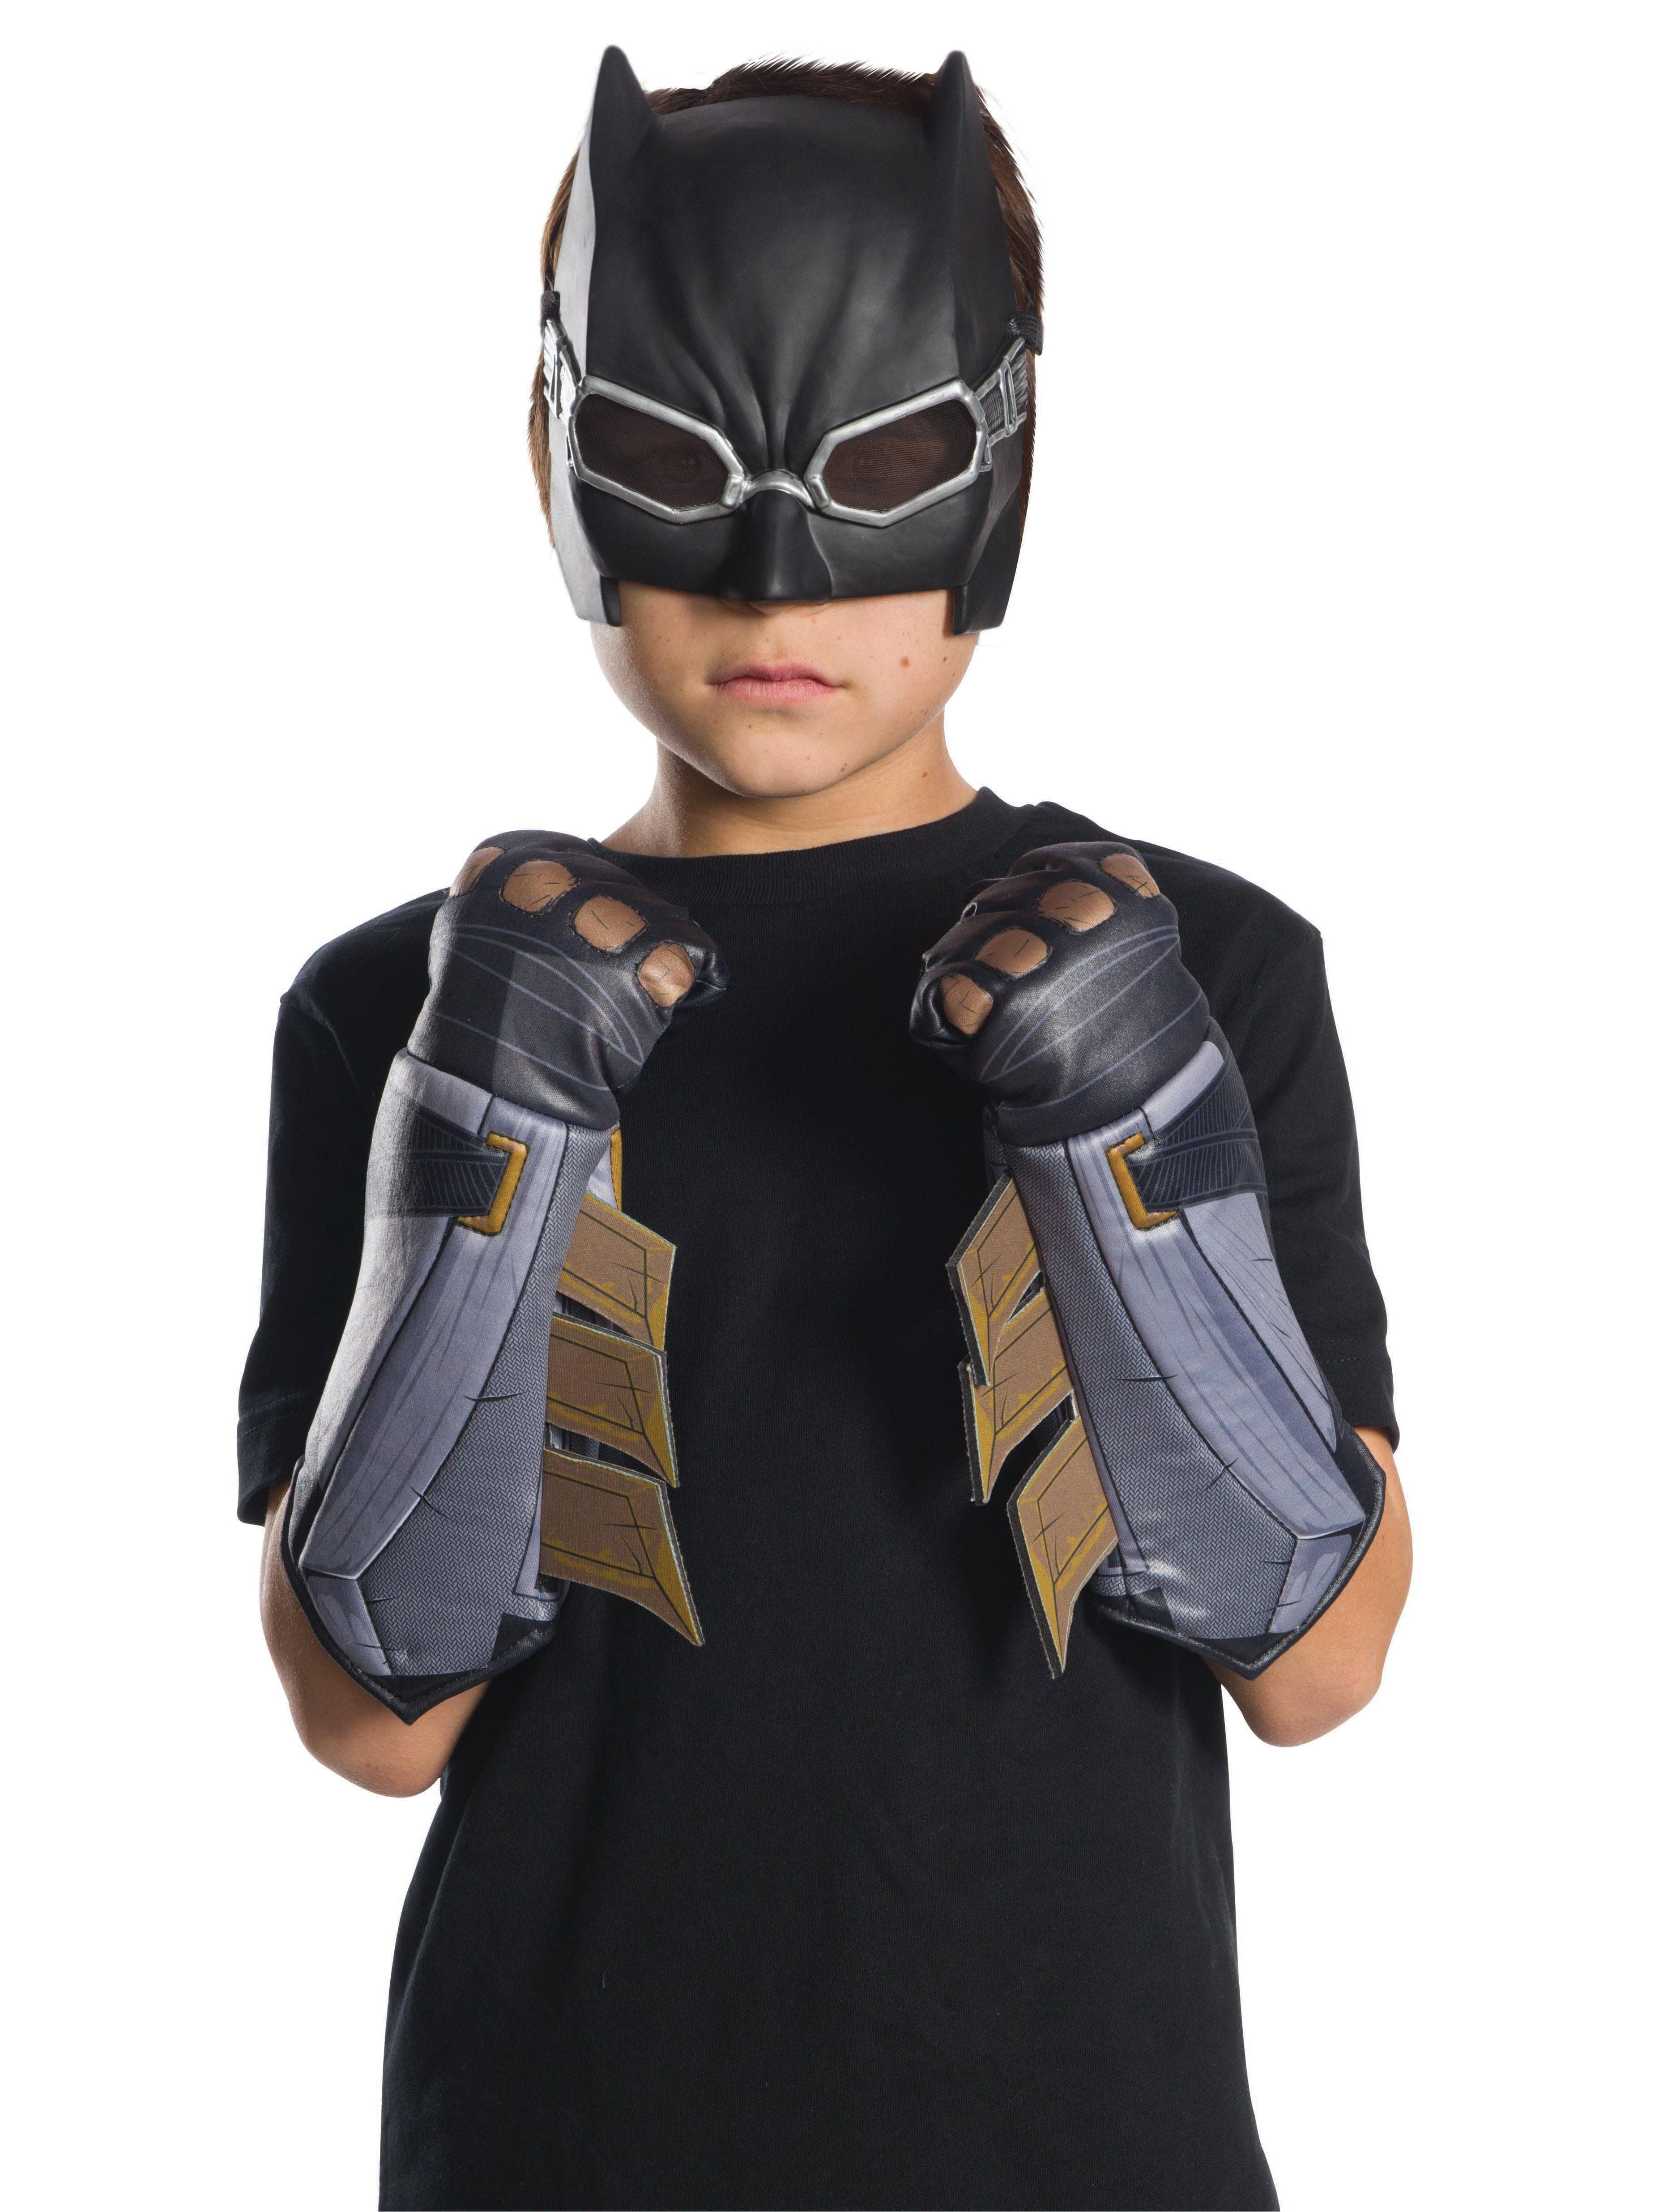 Boys' Justice League Batman Gauntlets - Deluxe - costumes.com